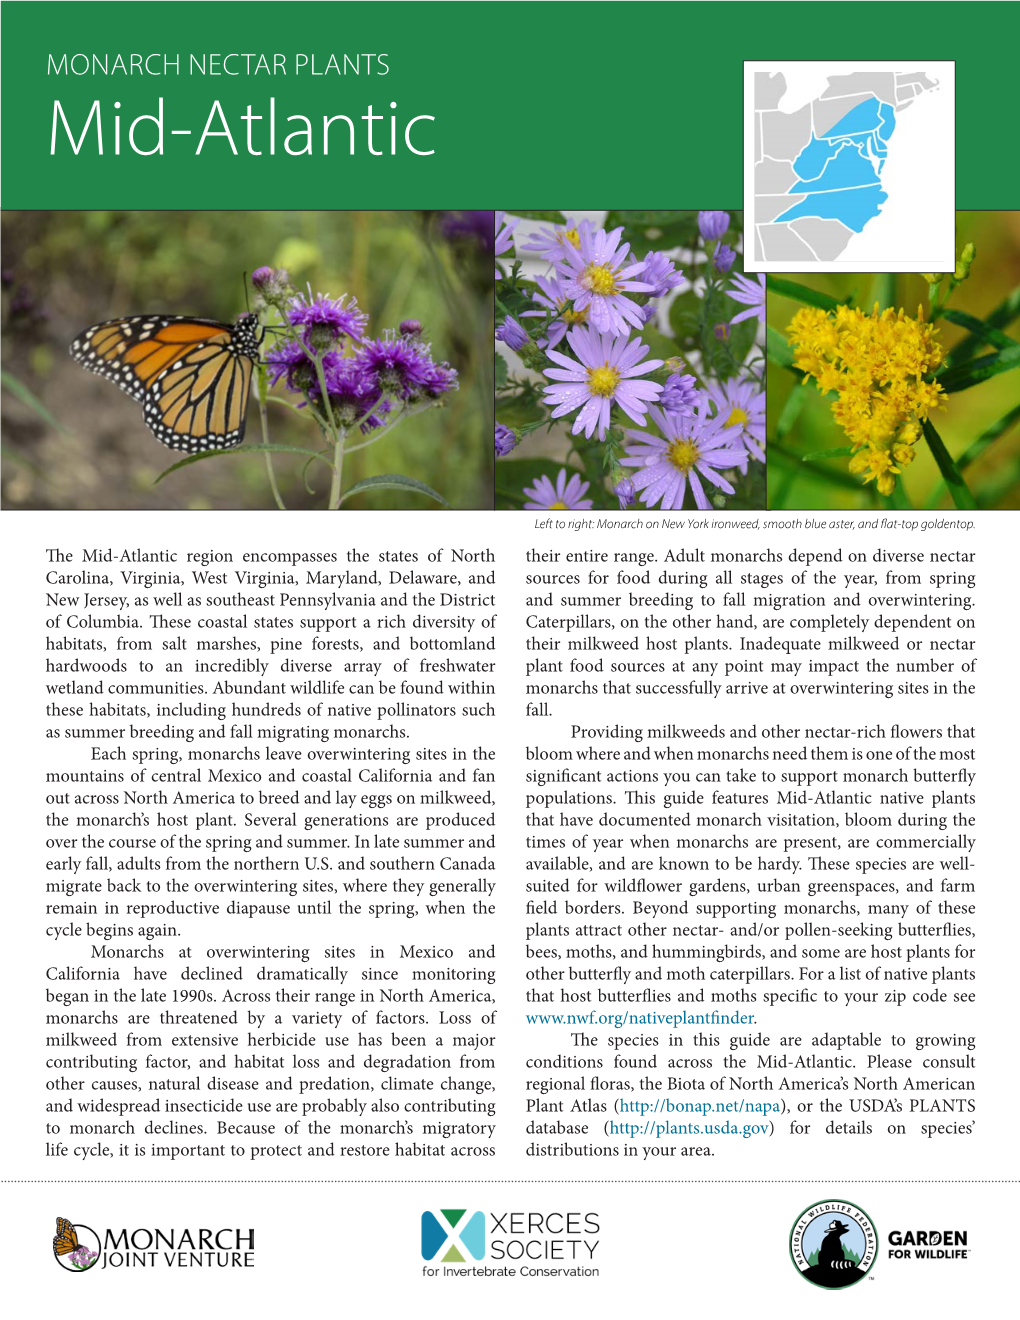 Monarch Nectar Plants: Mid-Atlantic